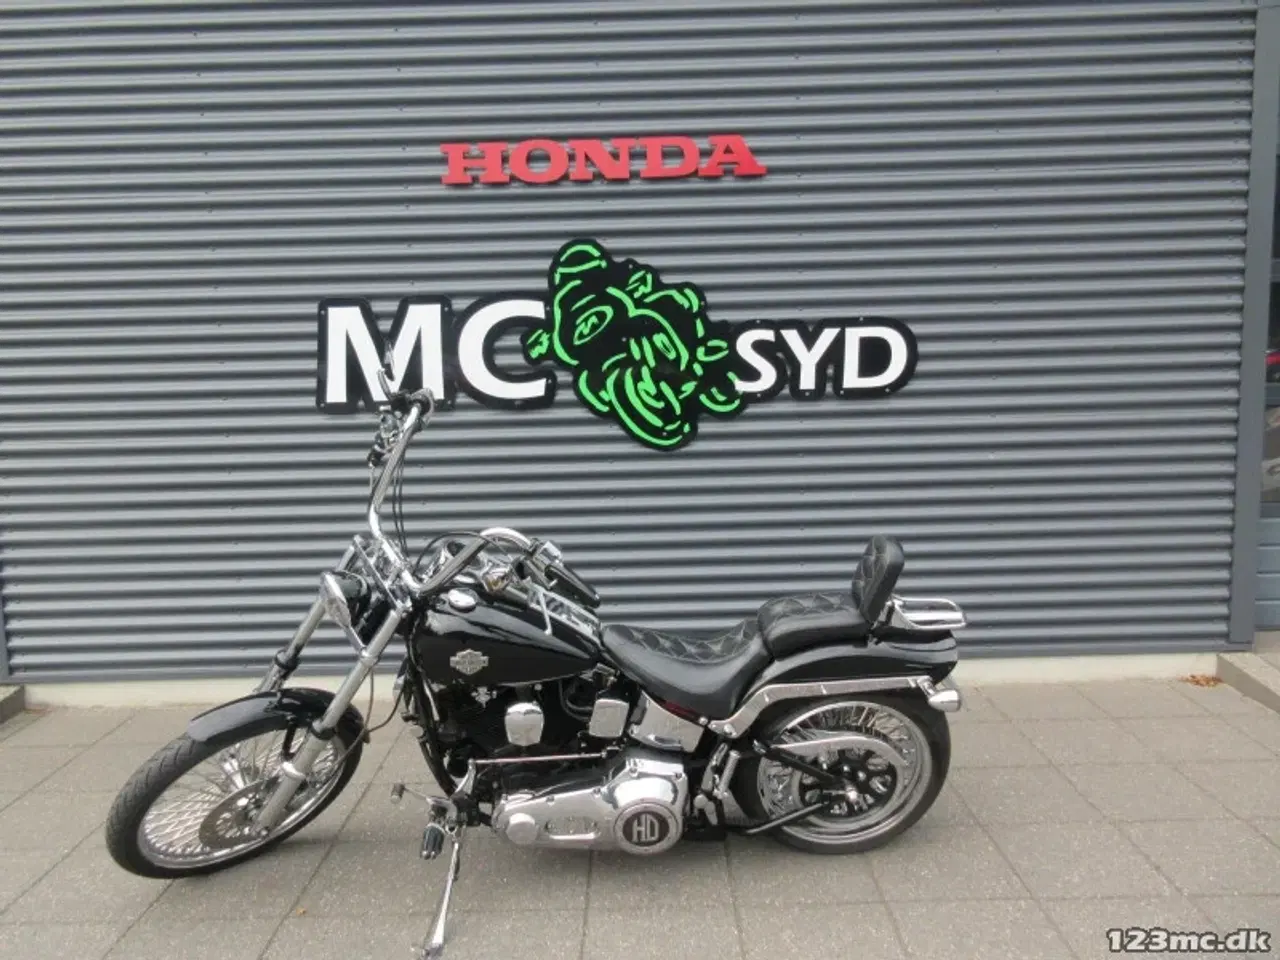 Billede 14 - Harley-Davidson FXSTC Softail Custom MC-SYD ENGROS /Bytter gerne